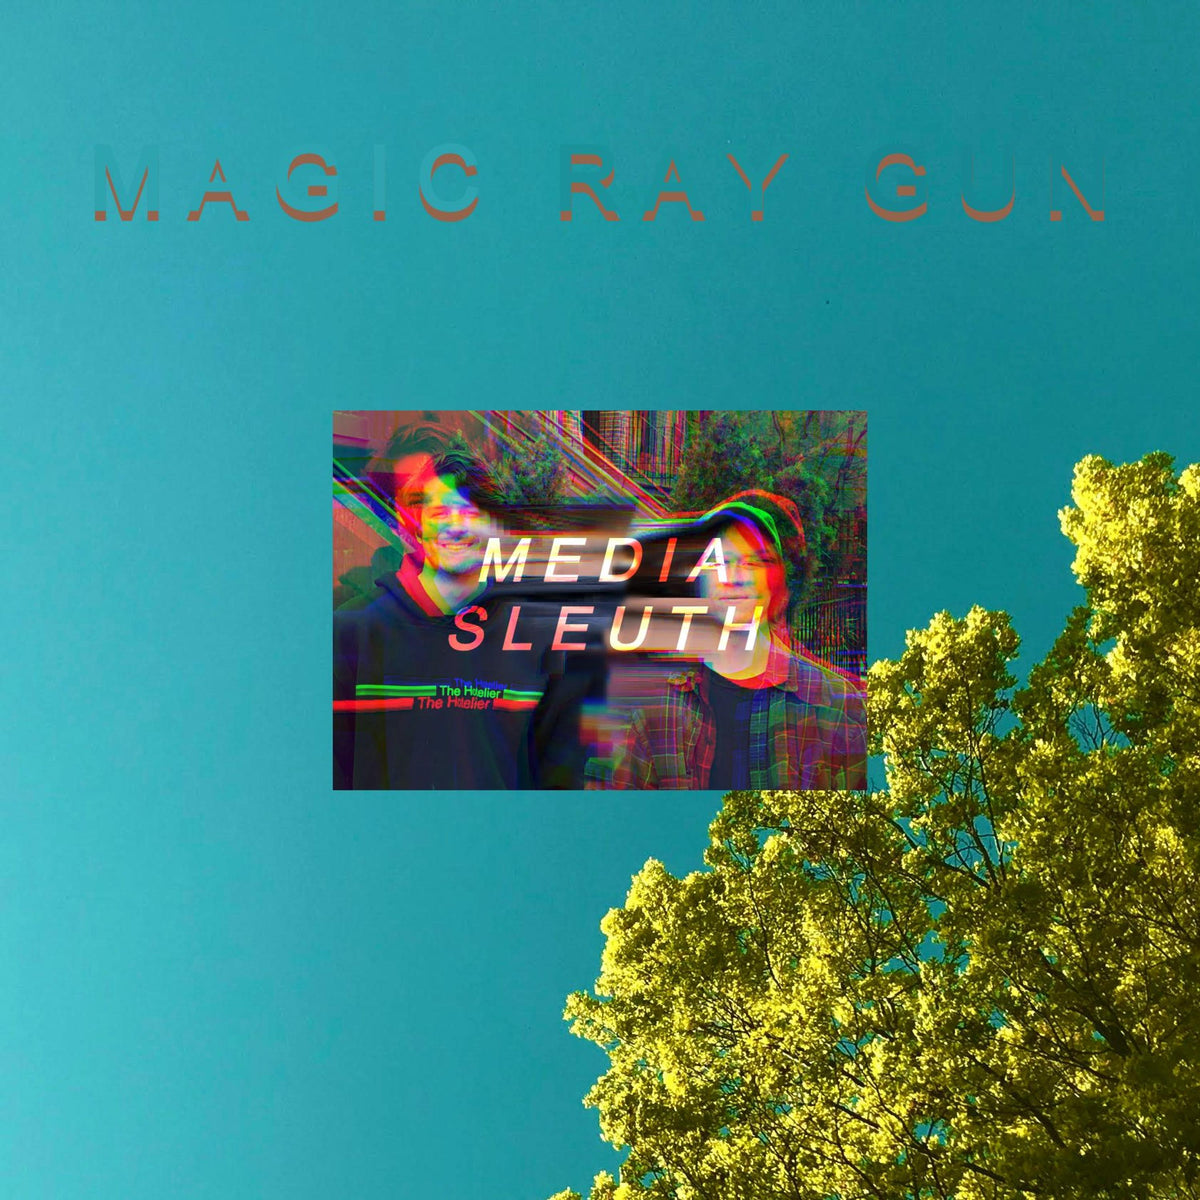 Magic Ray Gun - Media Sleuth